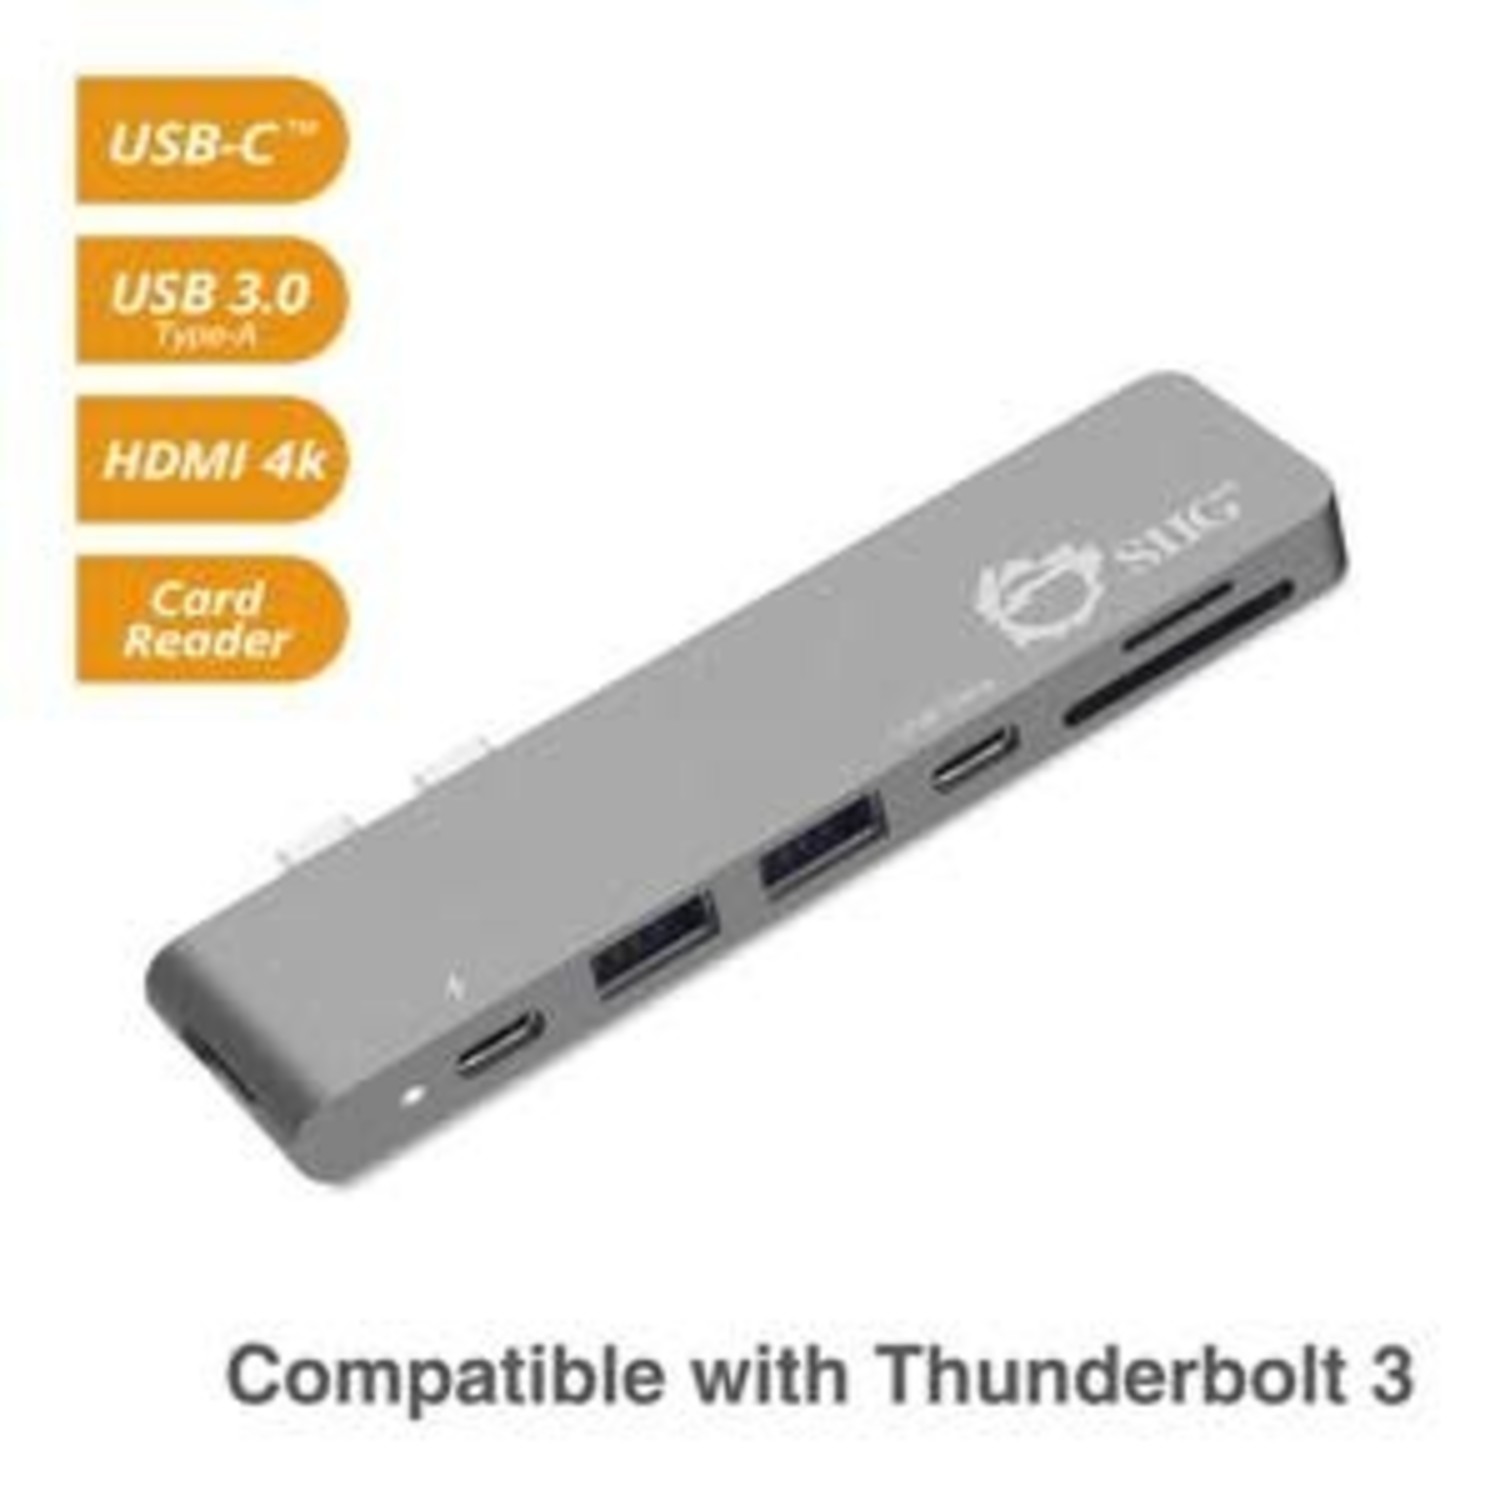 Thunderbolt 3 (USB-C) to Thunderbolt 2 Adapter - kite+key, Rutgers Tech  Store